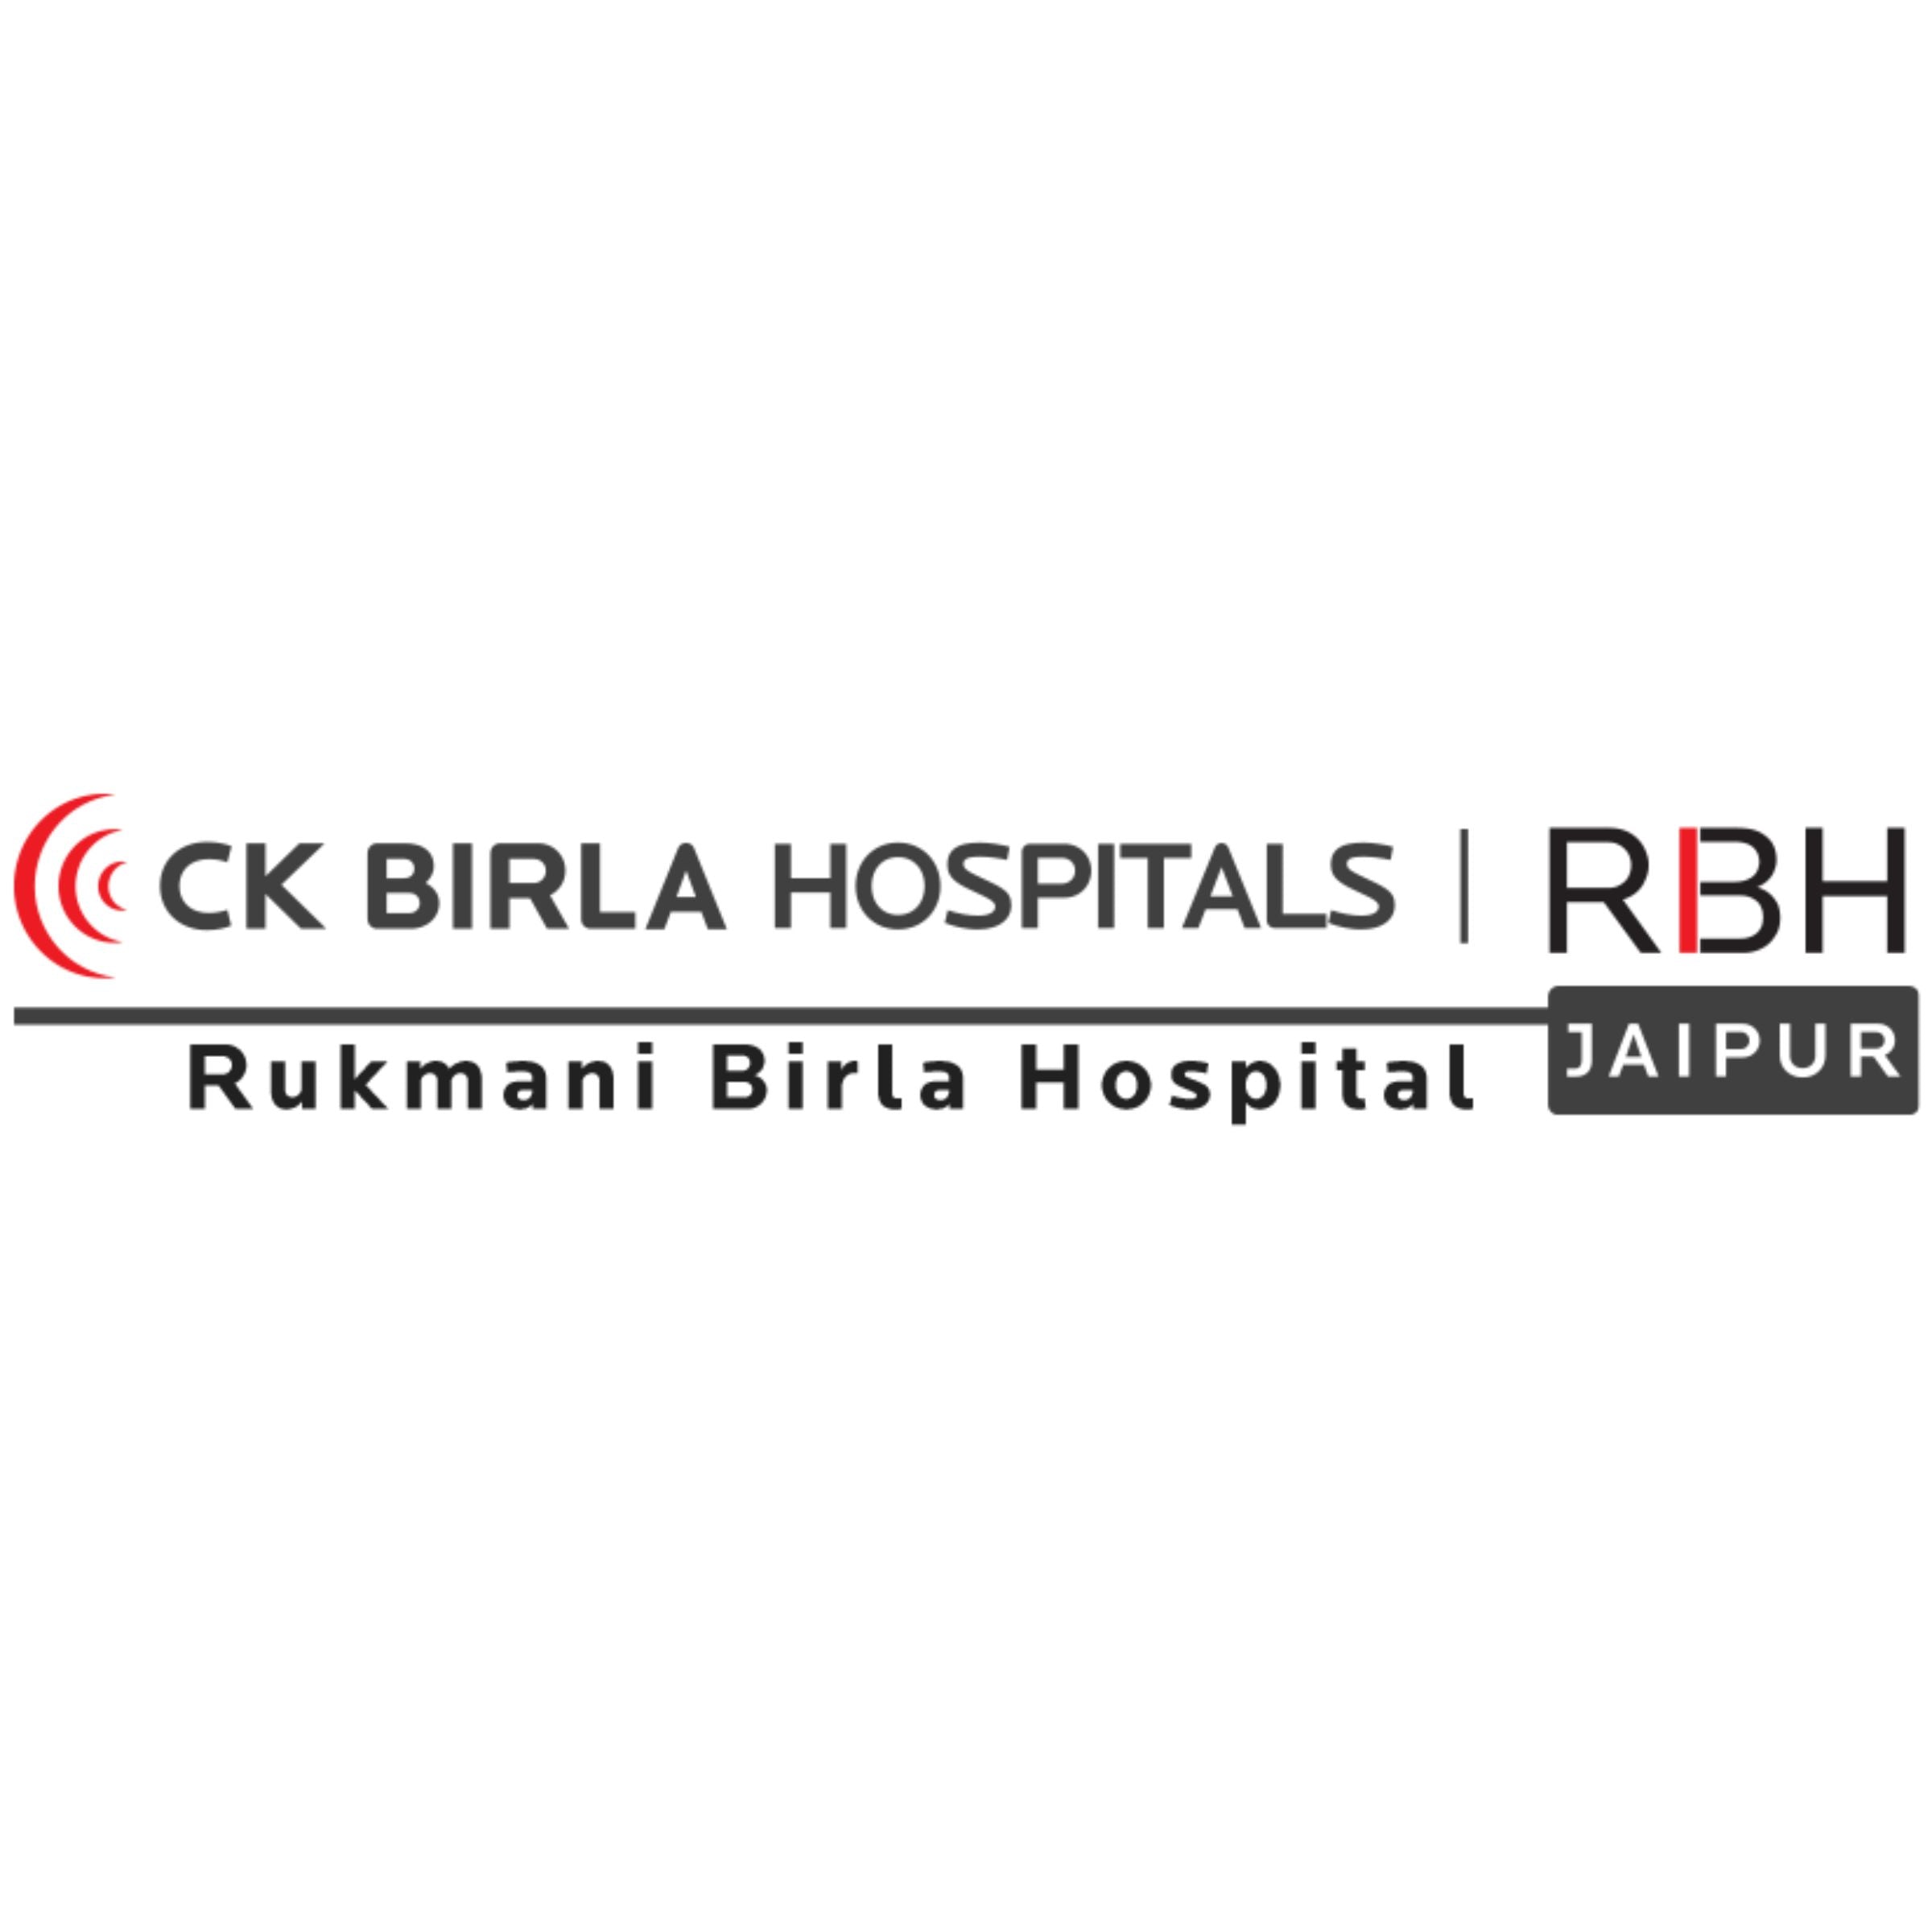 ck birla hospital logo